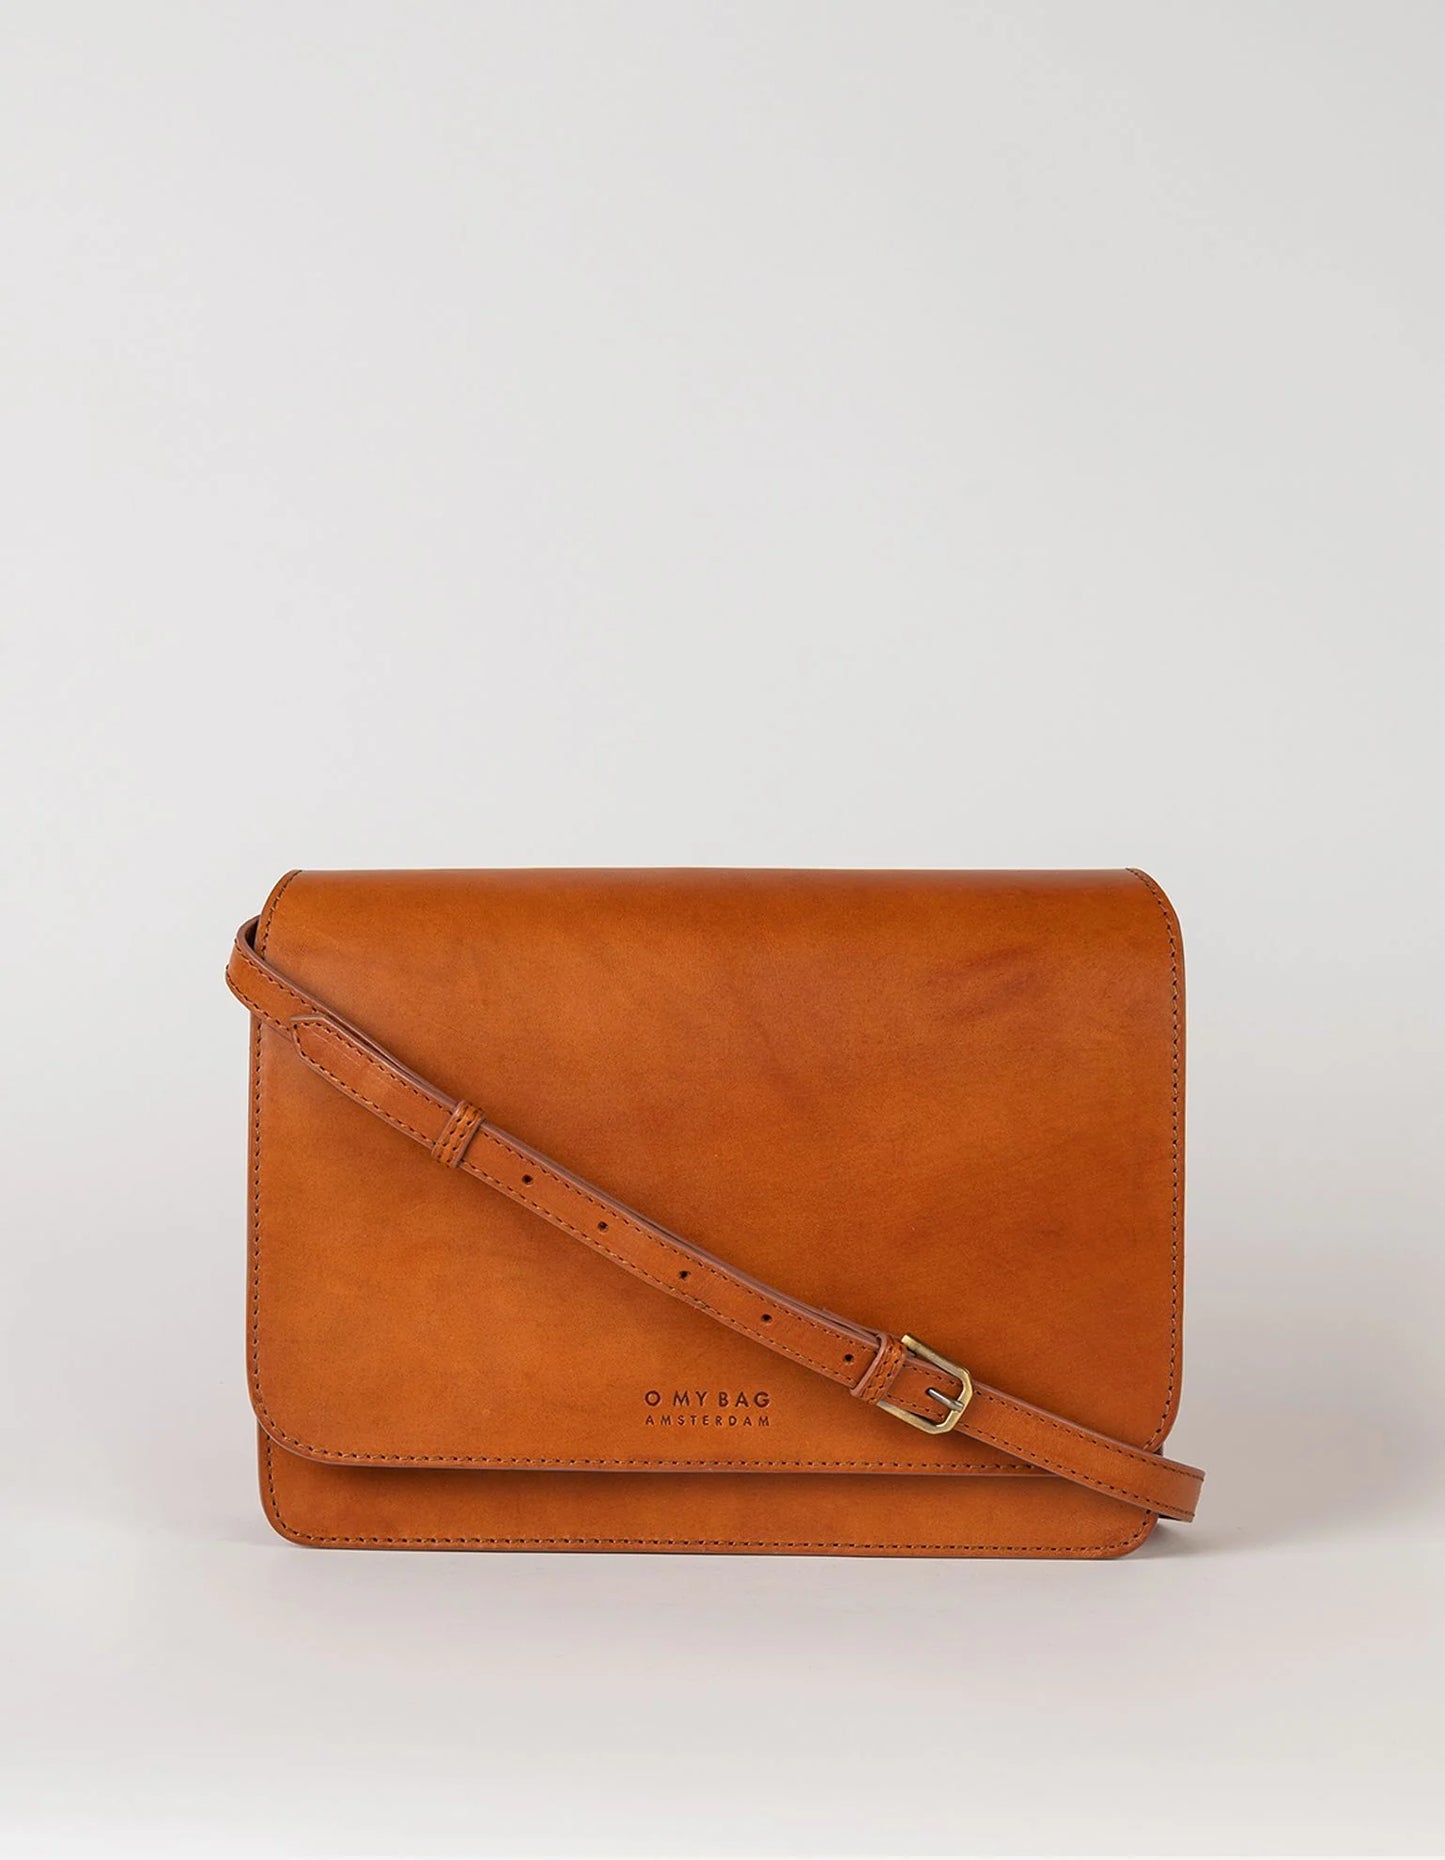 Audrey Leather Bag